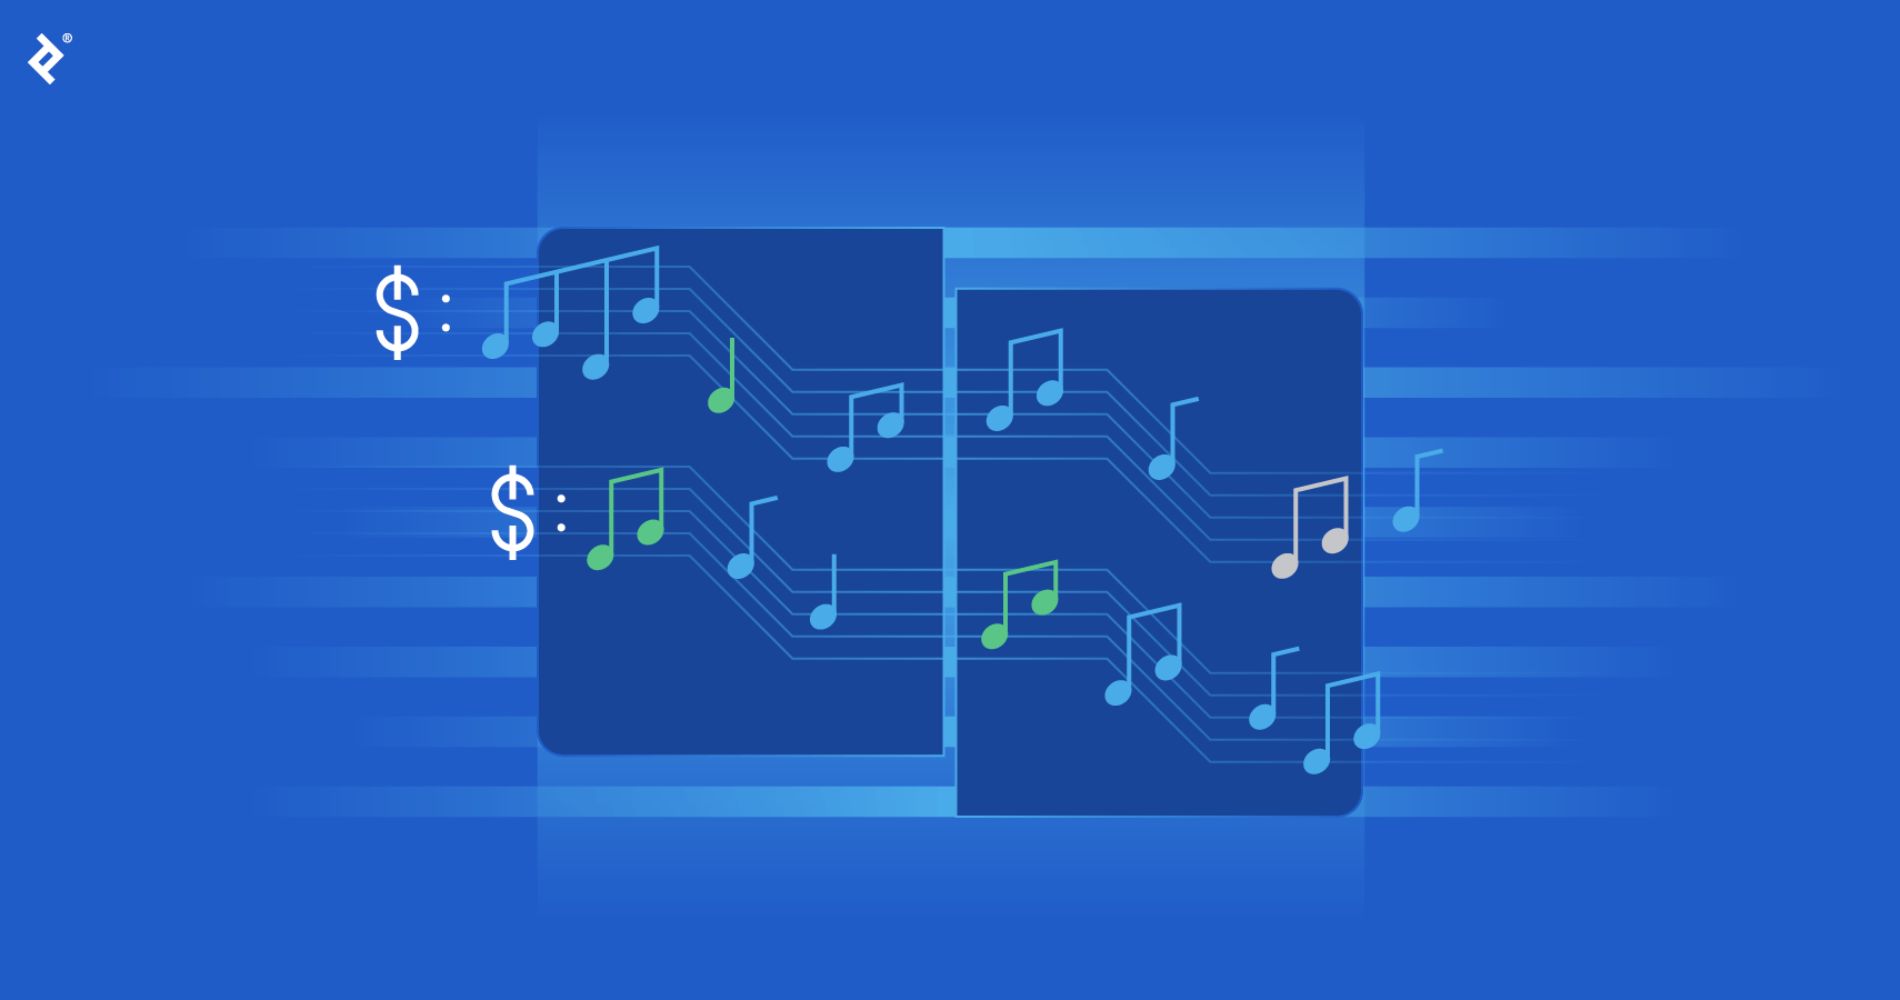 Music Business Software Market Is Thriving Worldwide-Artist Growth